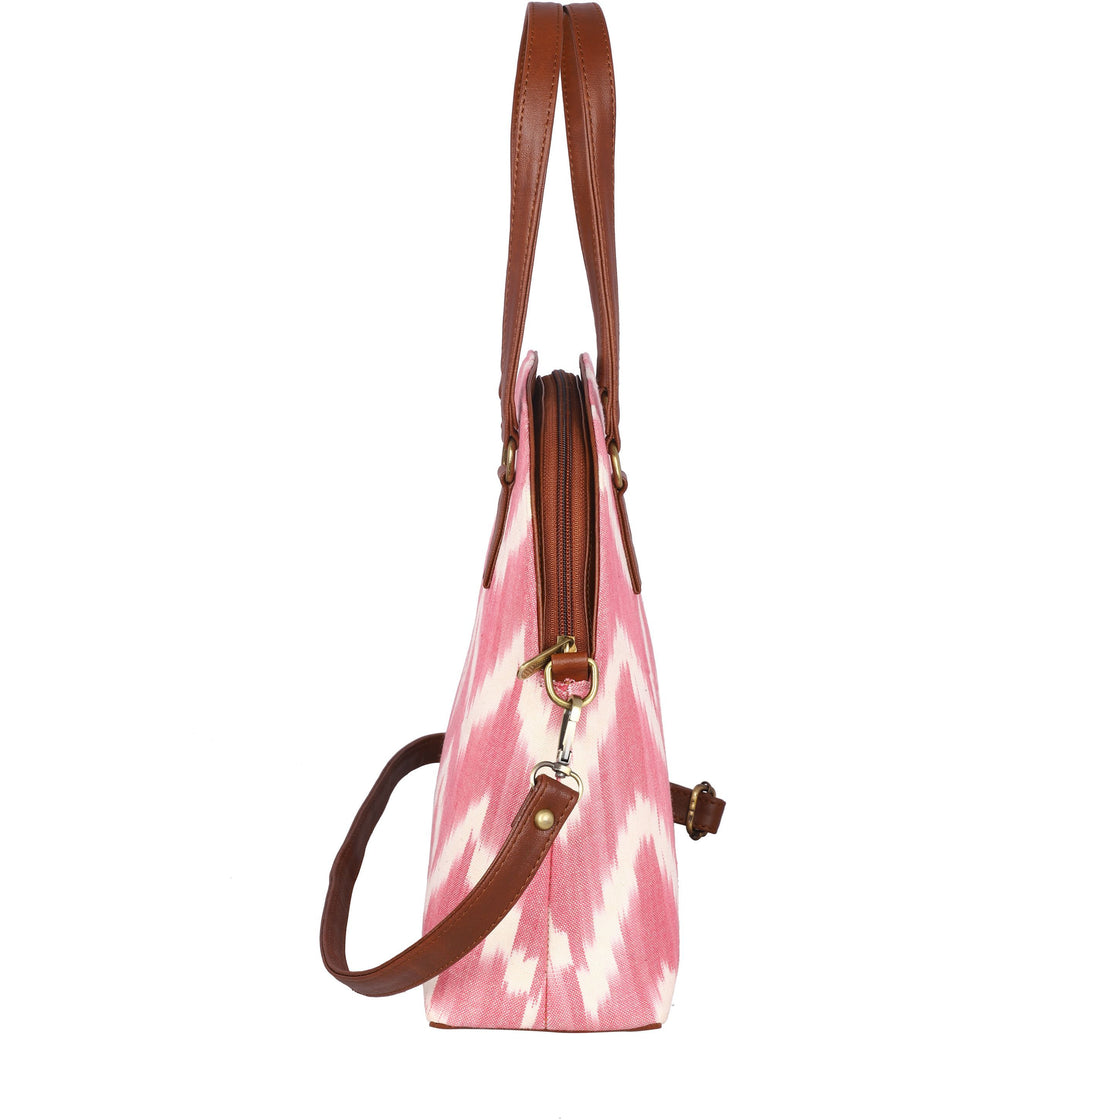 Handwoven ikat vegan leather handbag/crossbody bag